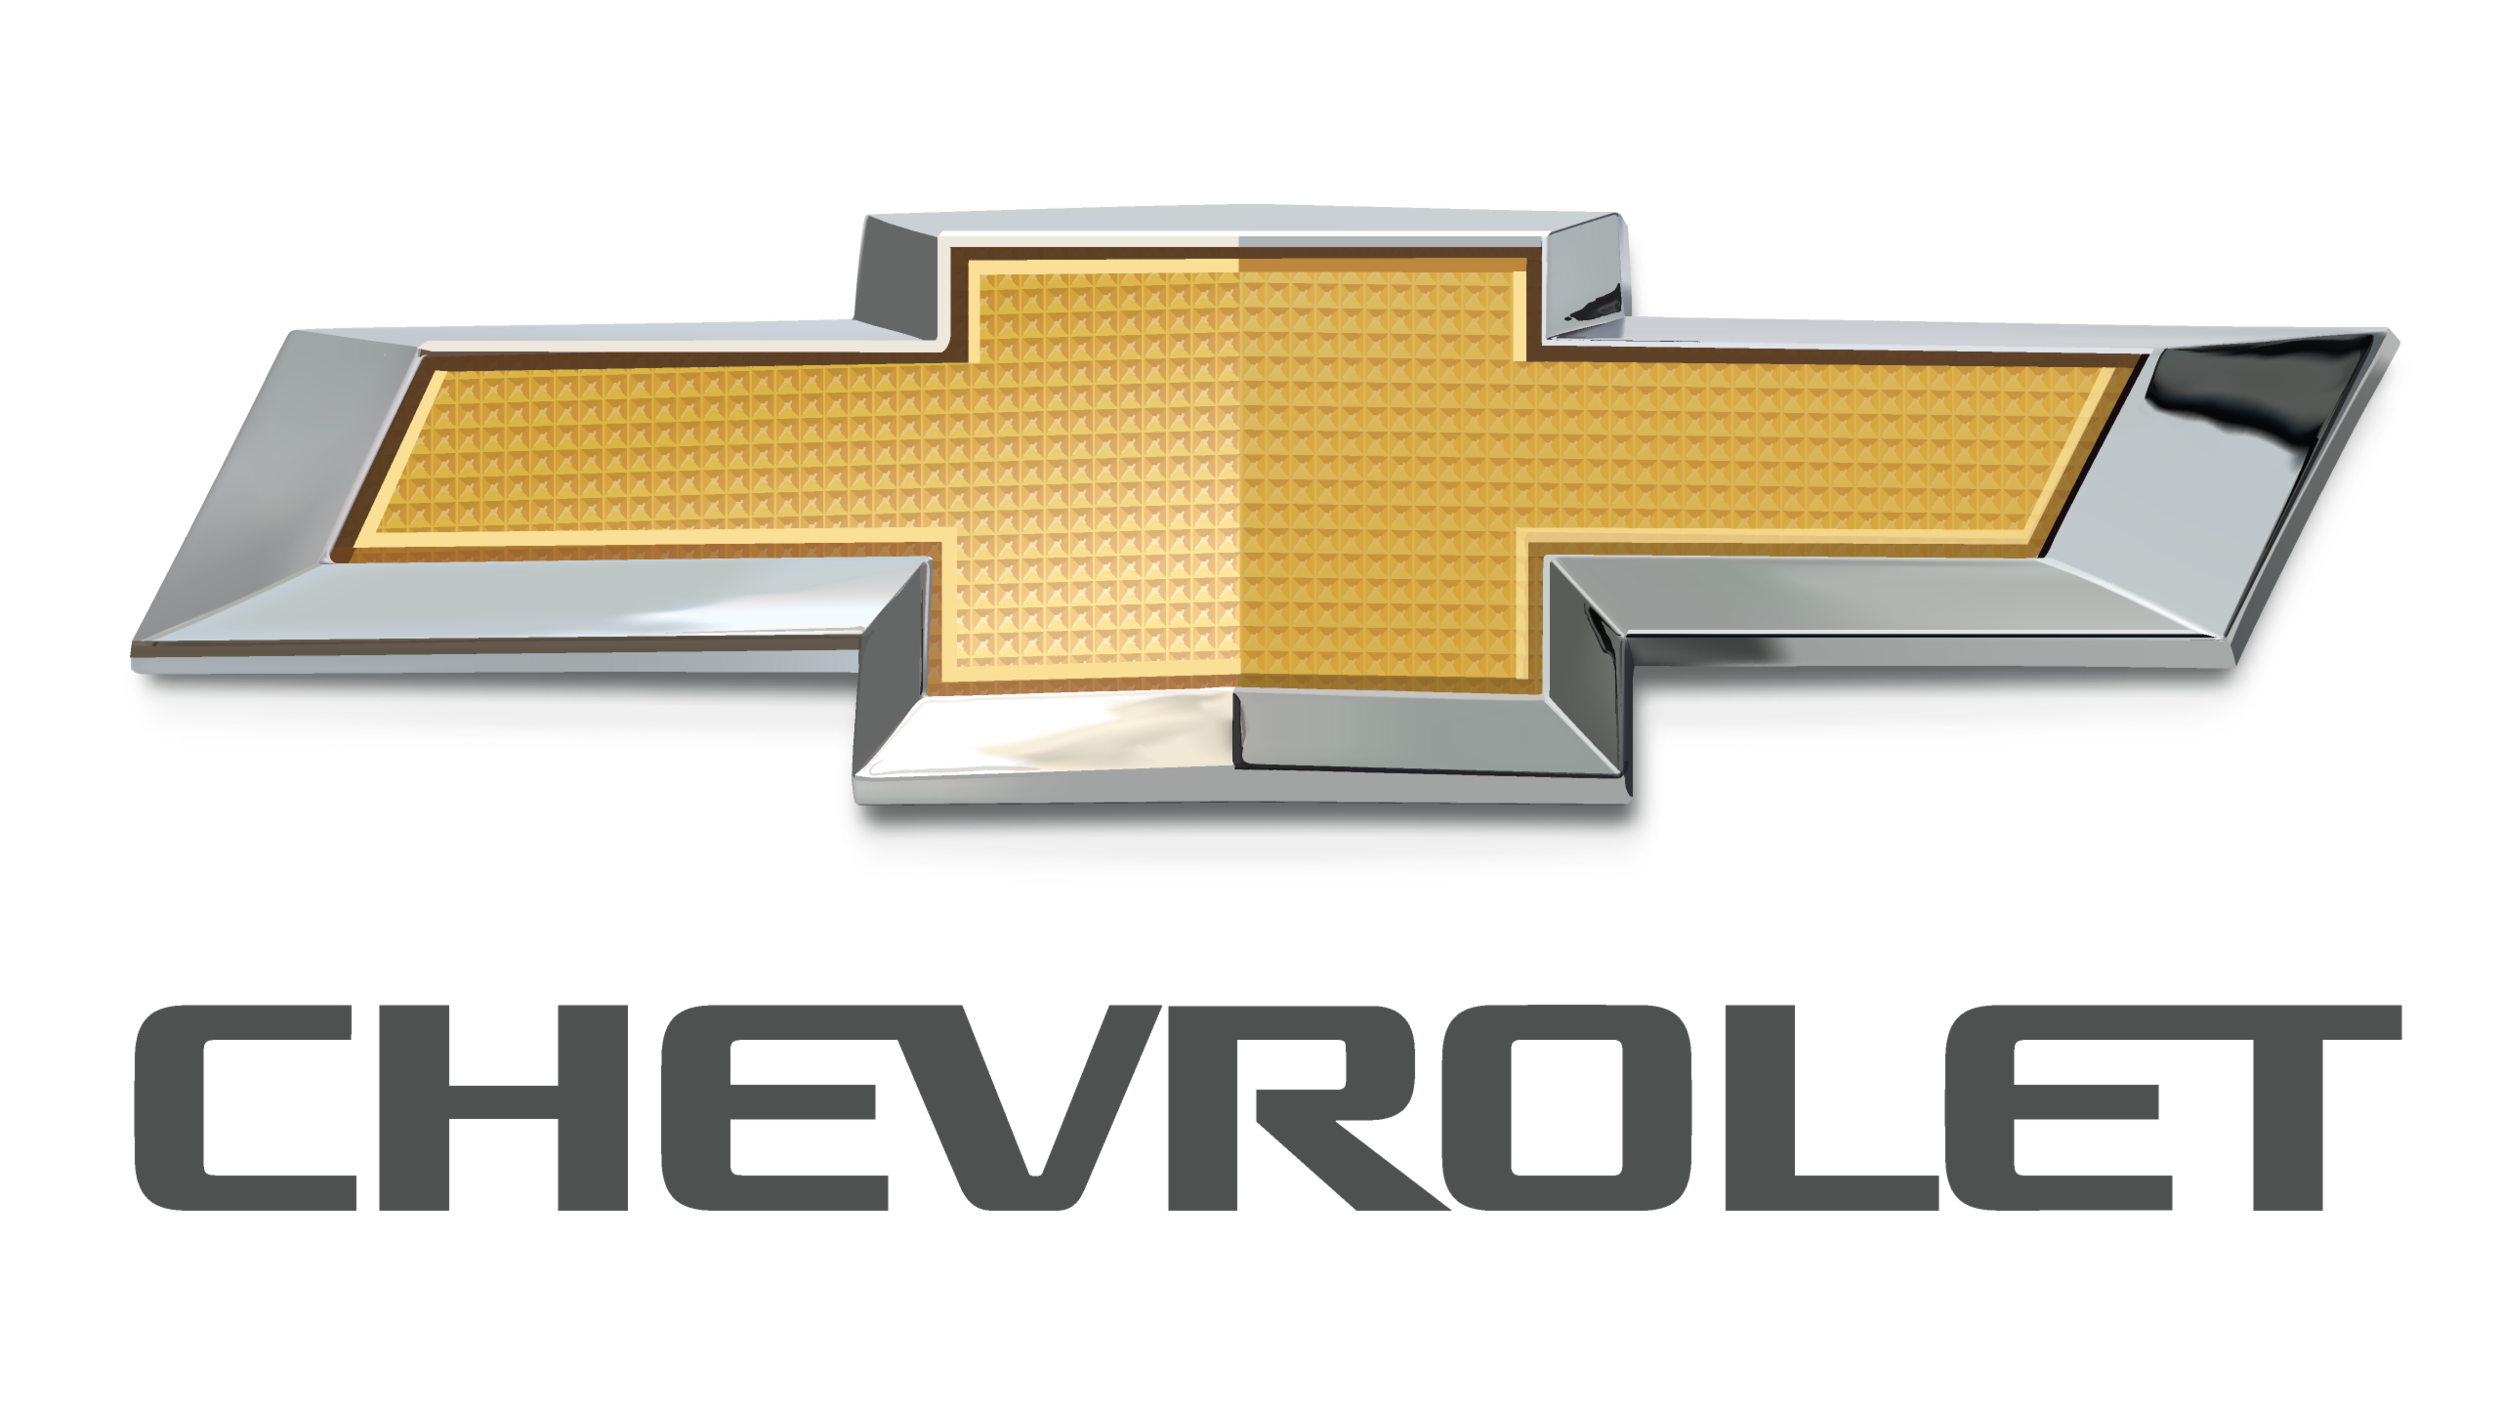 Chevrolet-logo-2013-2560x1440.png